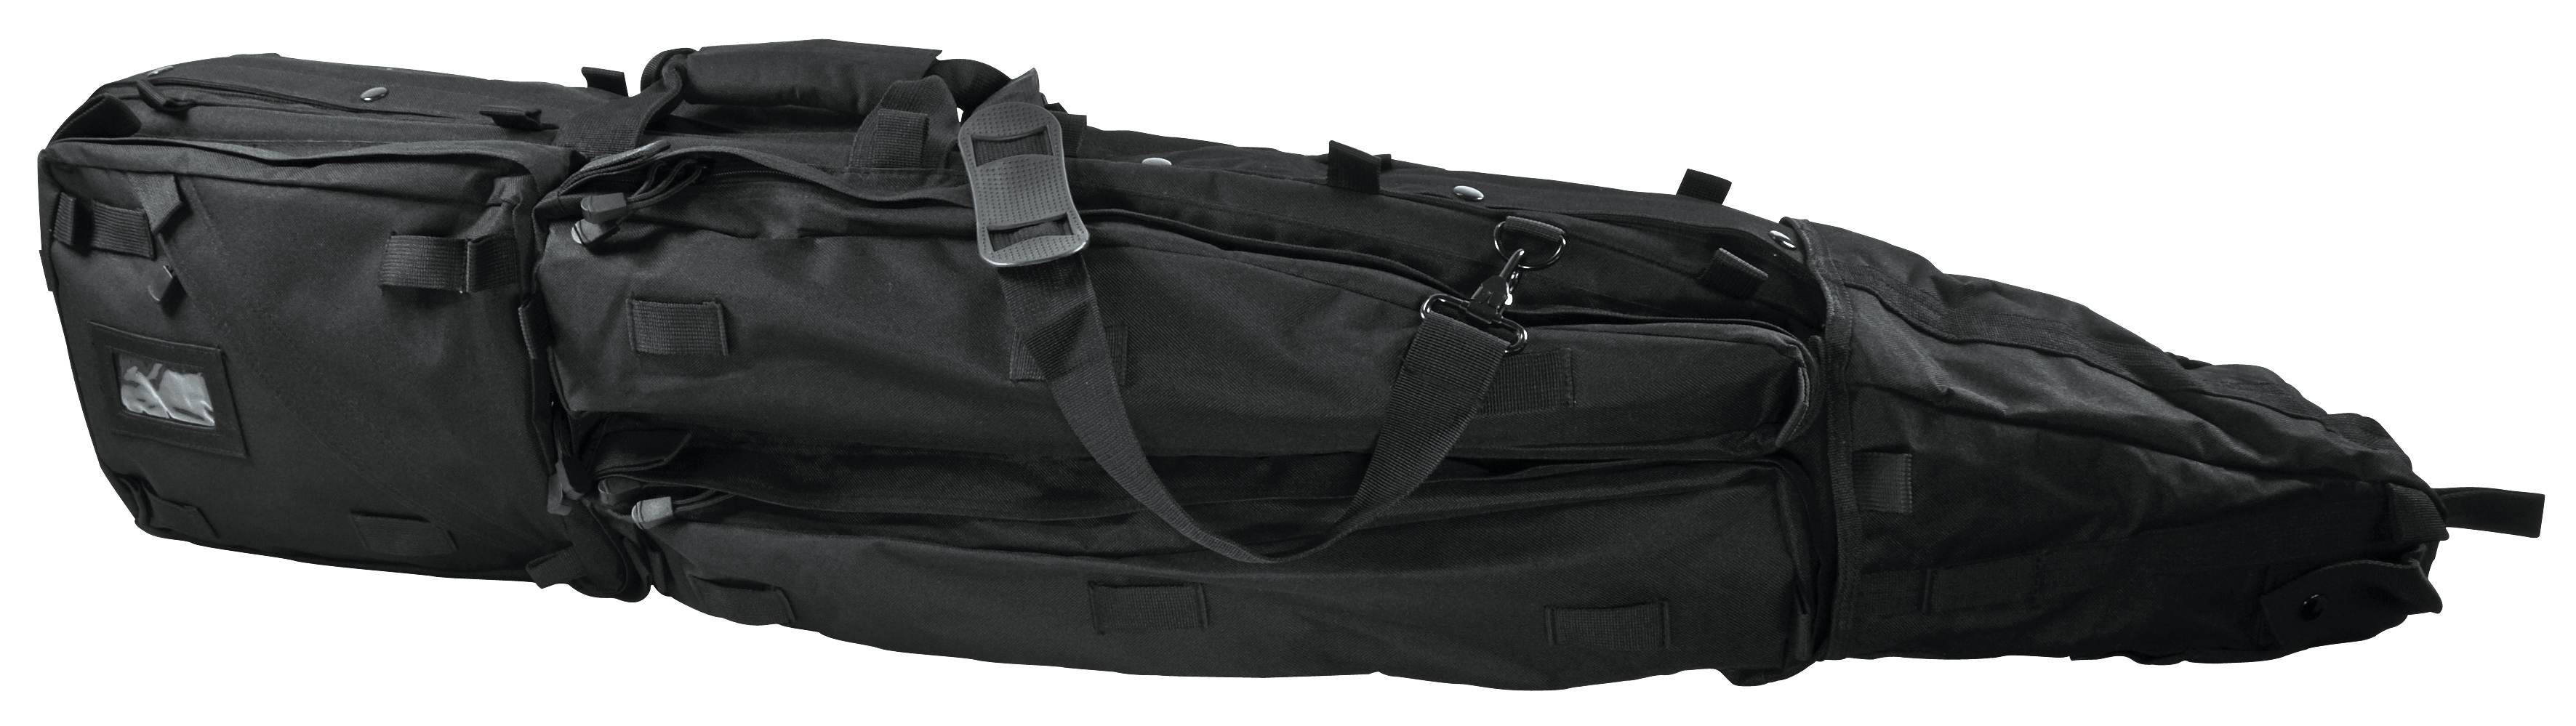 New NCStar VISM Tactical Rifle Gun Carry Case Drag Bag Black 